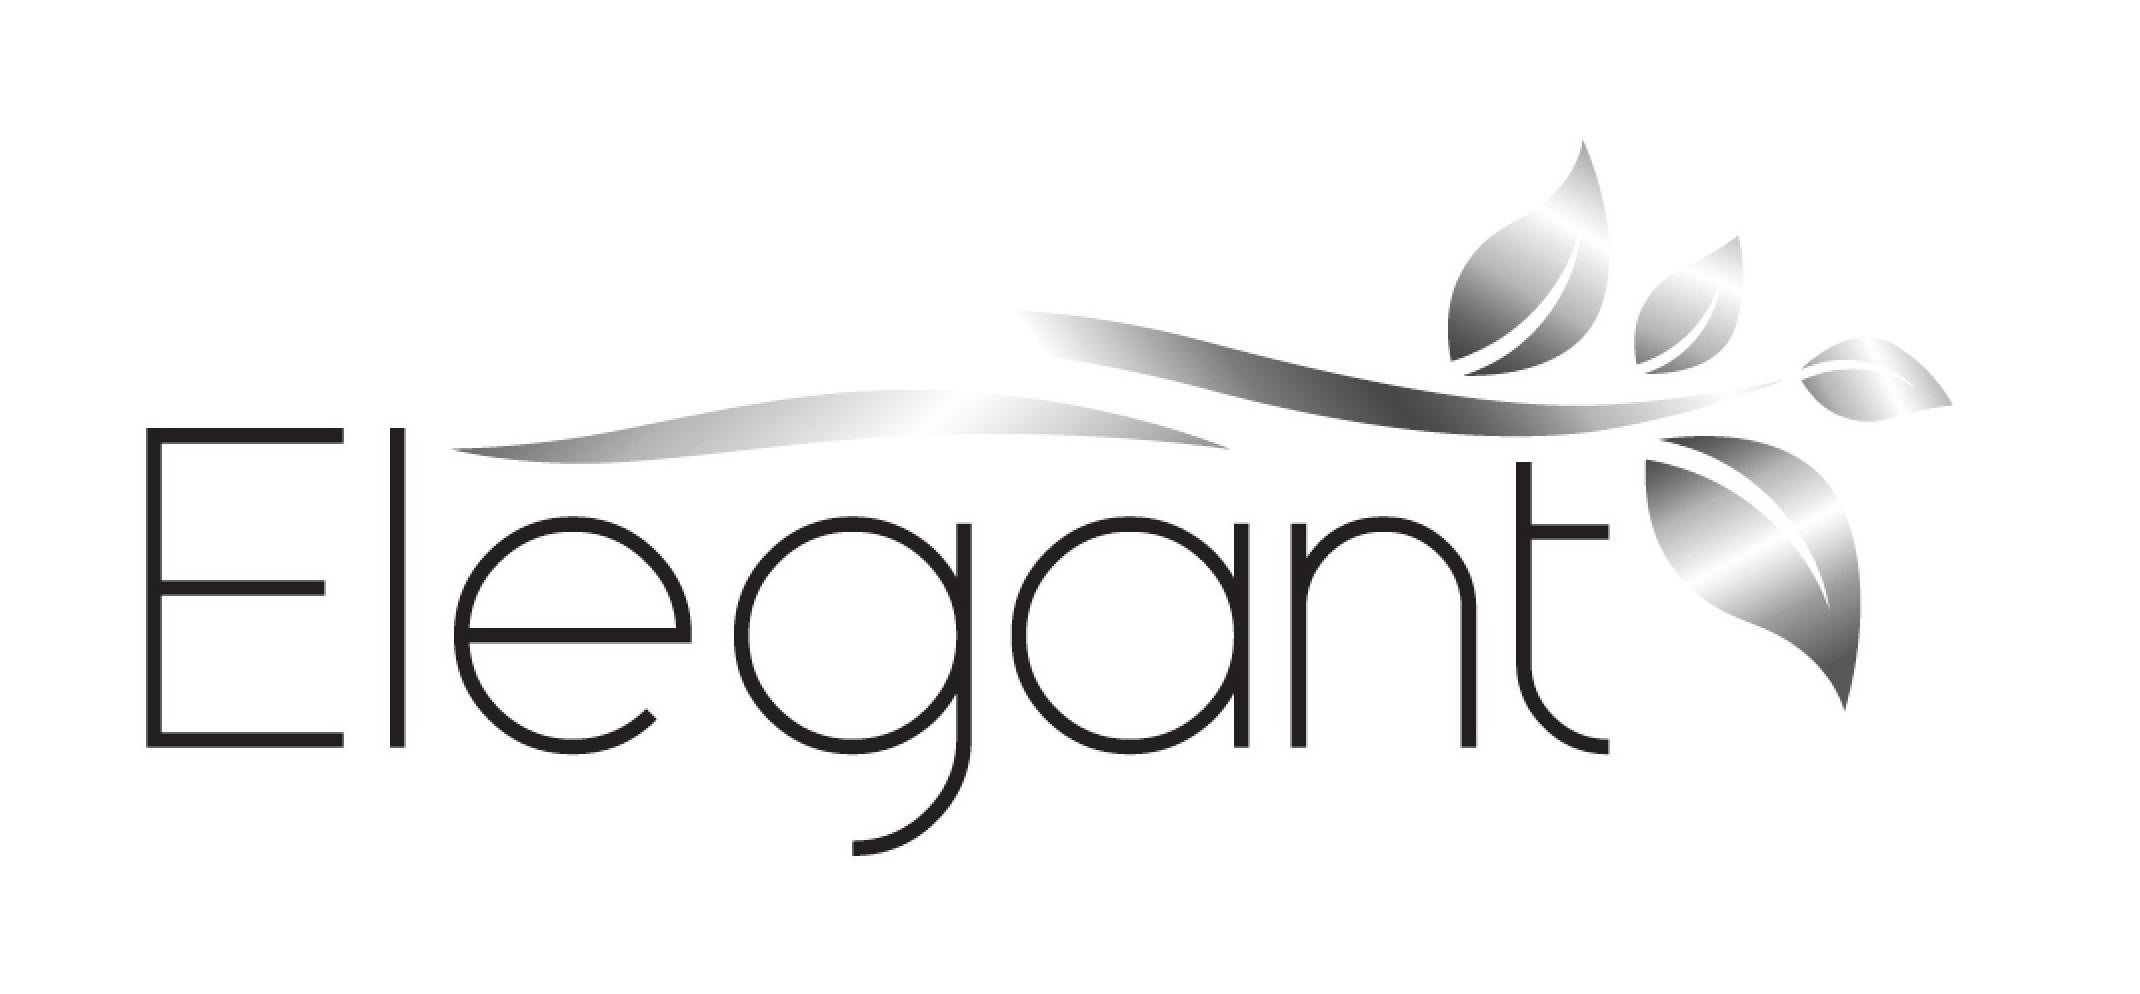 Trademark Logo ELEGANT